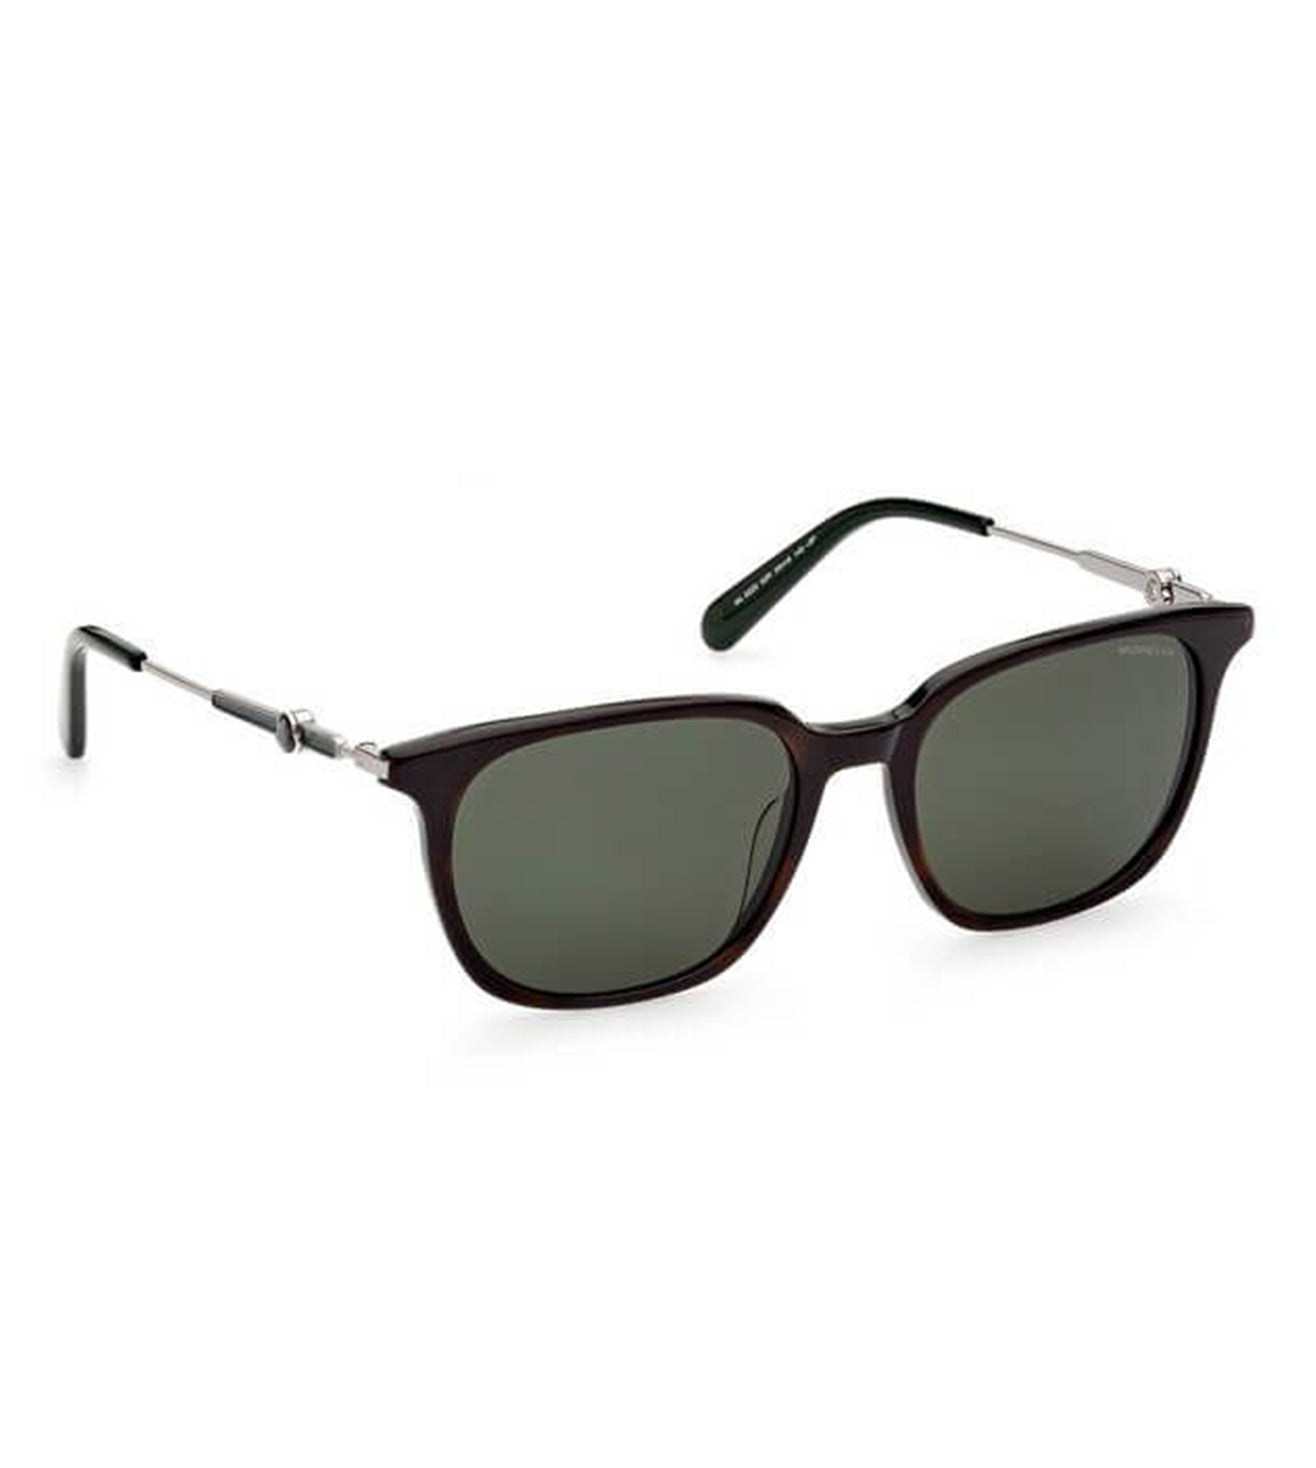 Moncler Men's Green Polarized Square Sunglasses